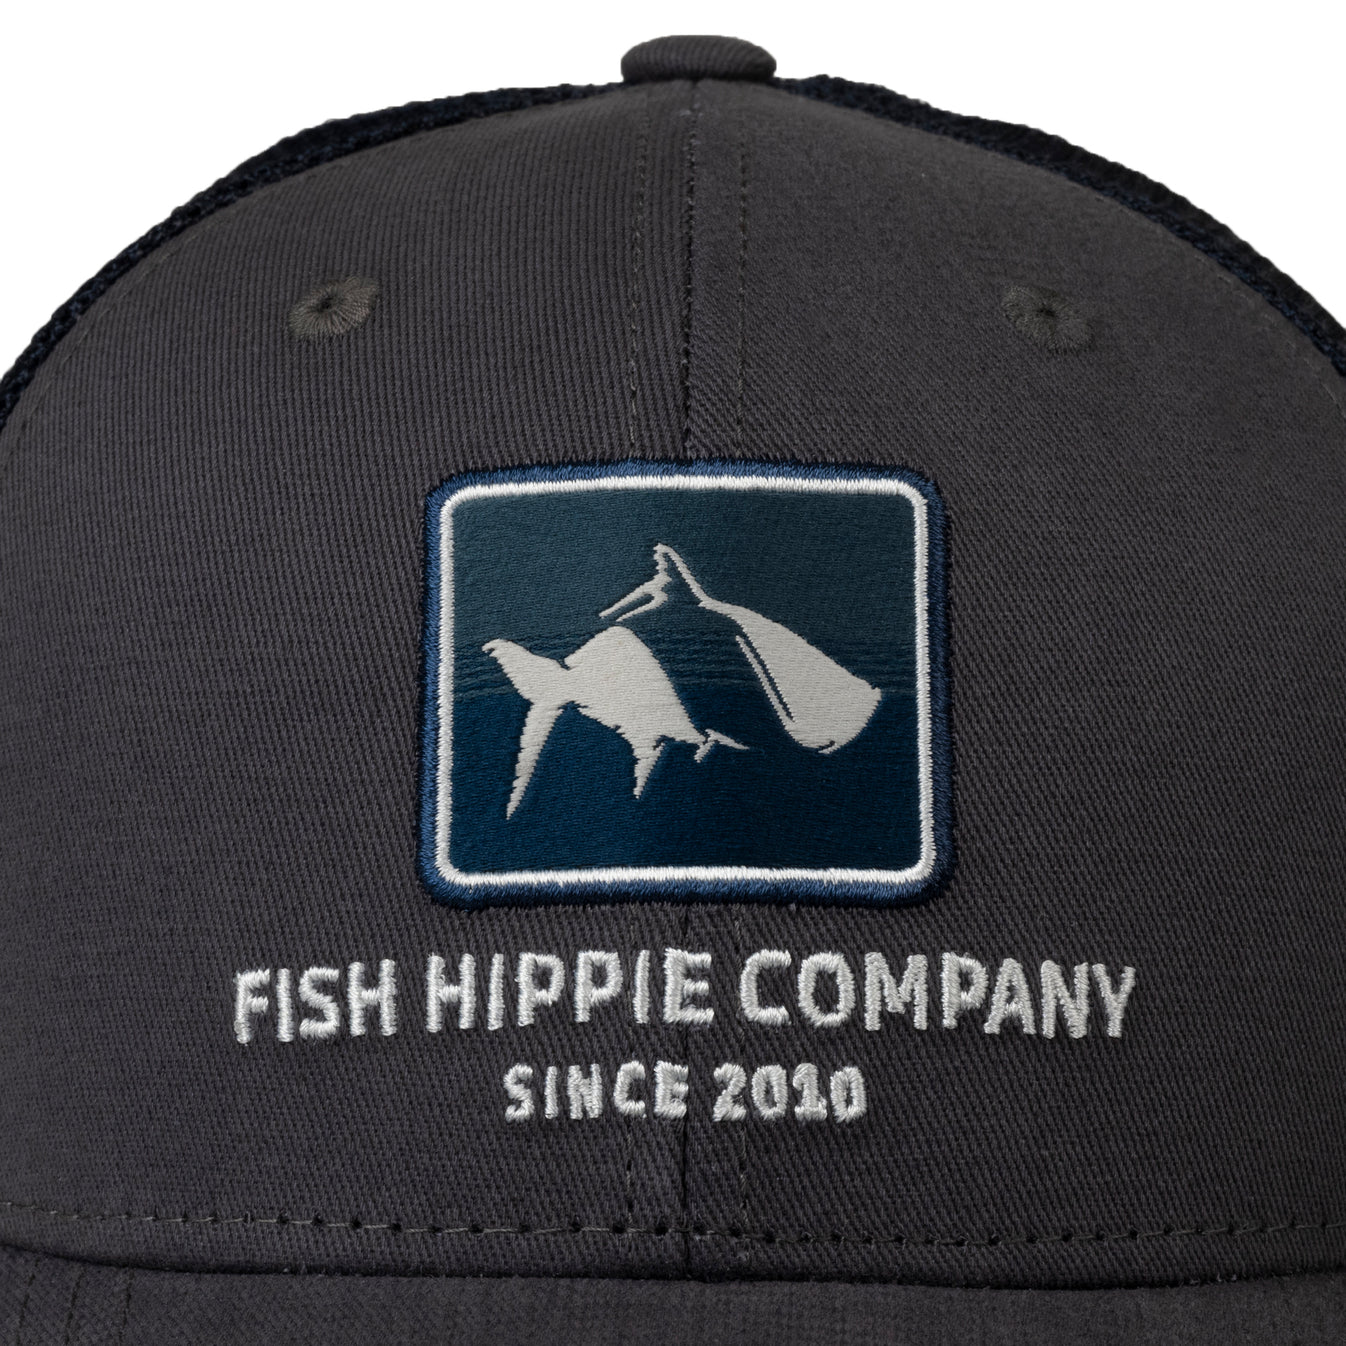 Fish Hippie Co. Fishing Hat Baseball Cap Blue Gray Red Mesh